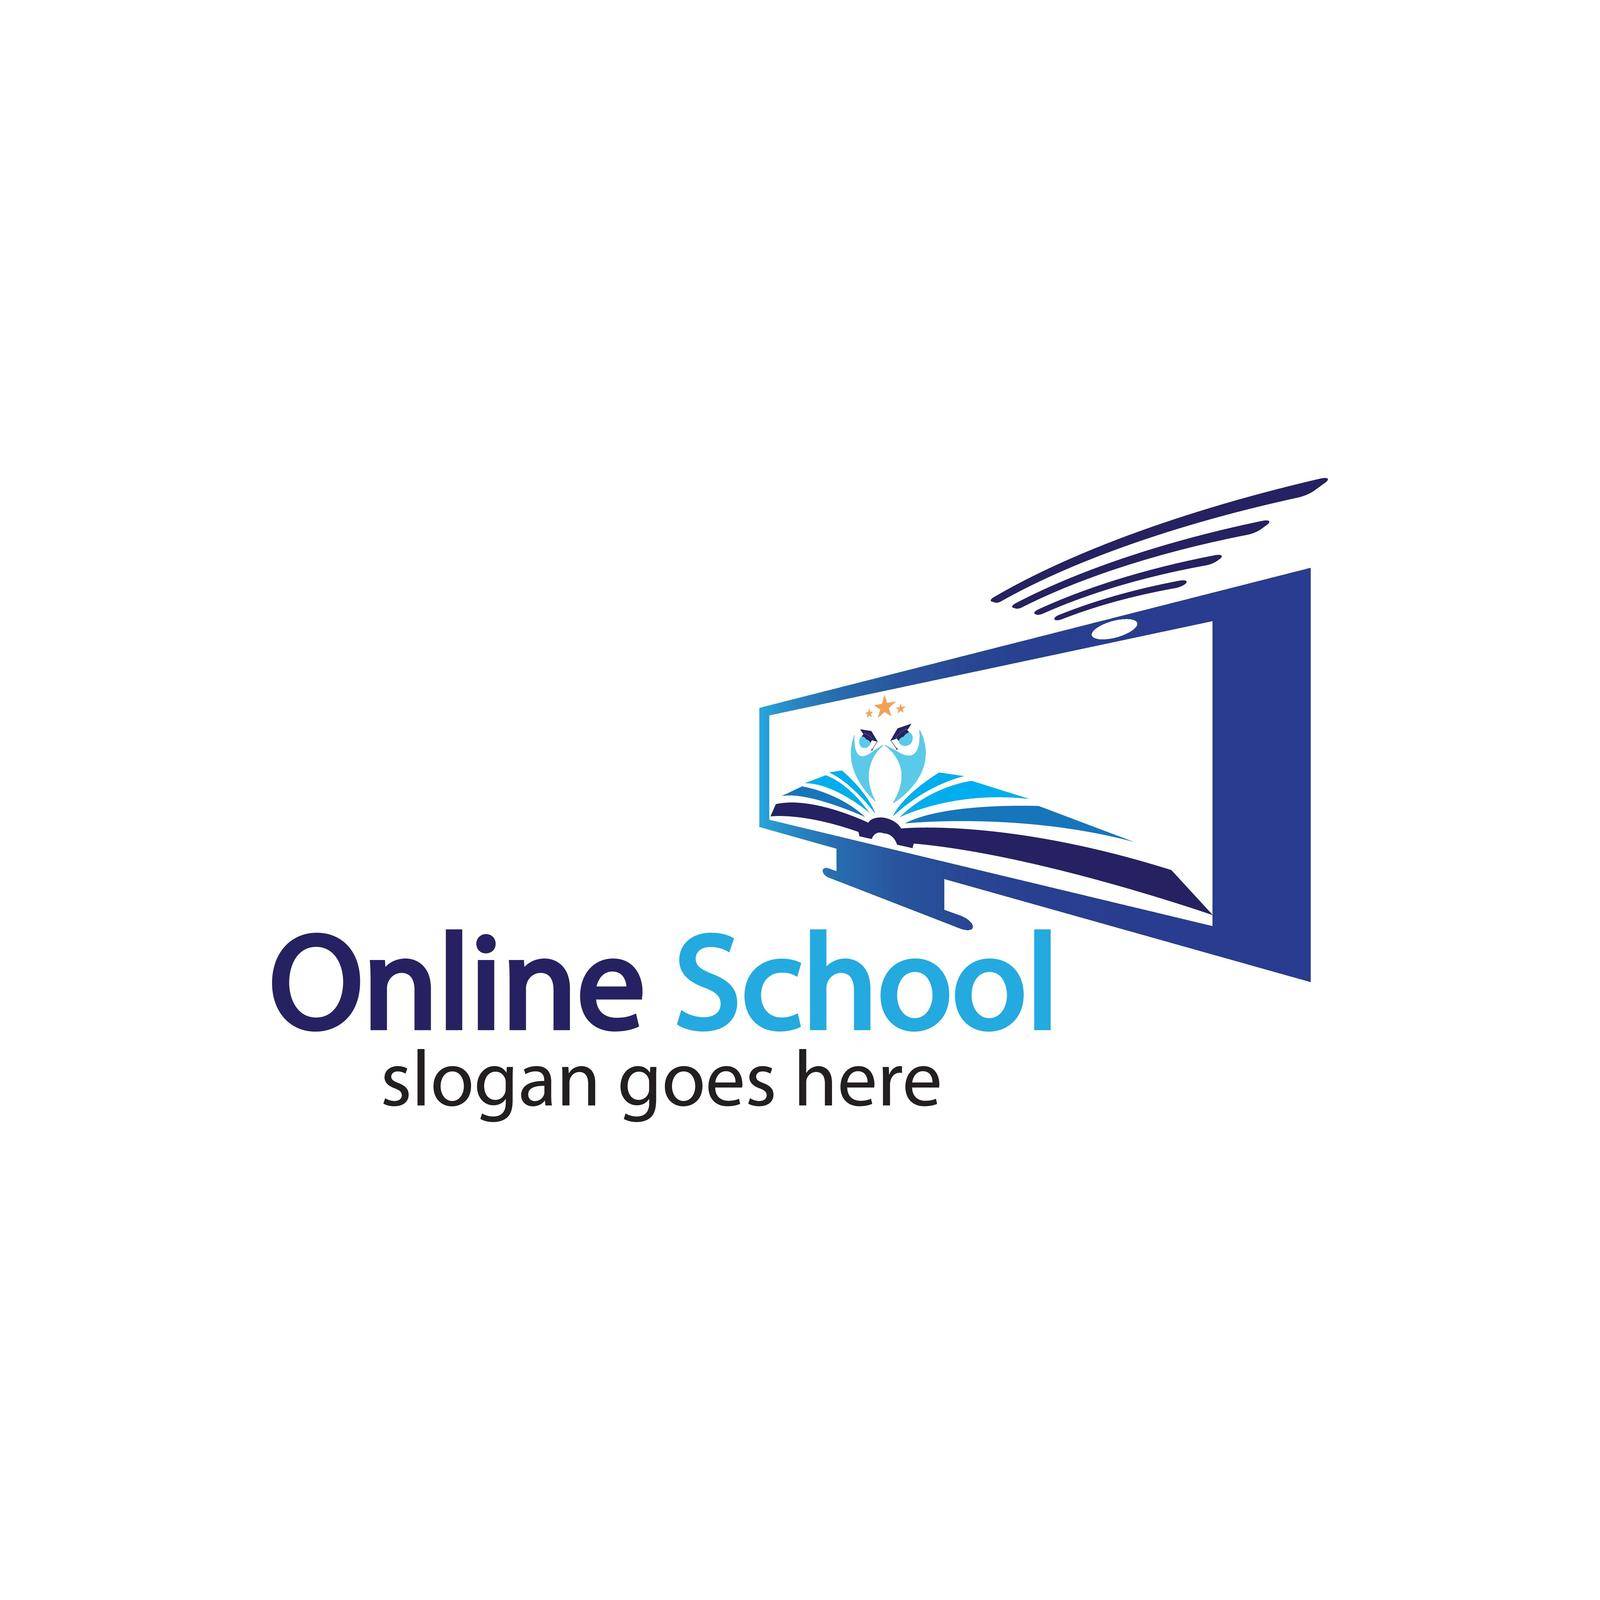 Online Education logo design template. Online course logo design. Online Learning logo by Mrsongrphc